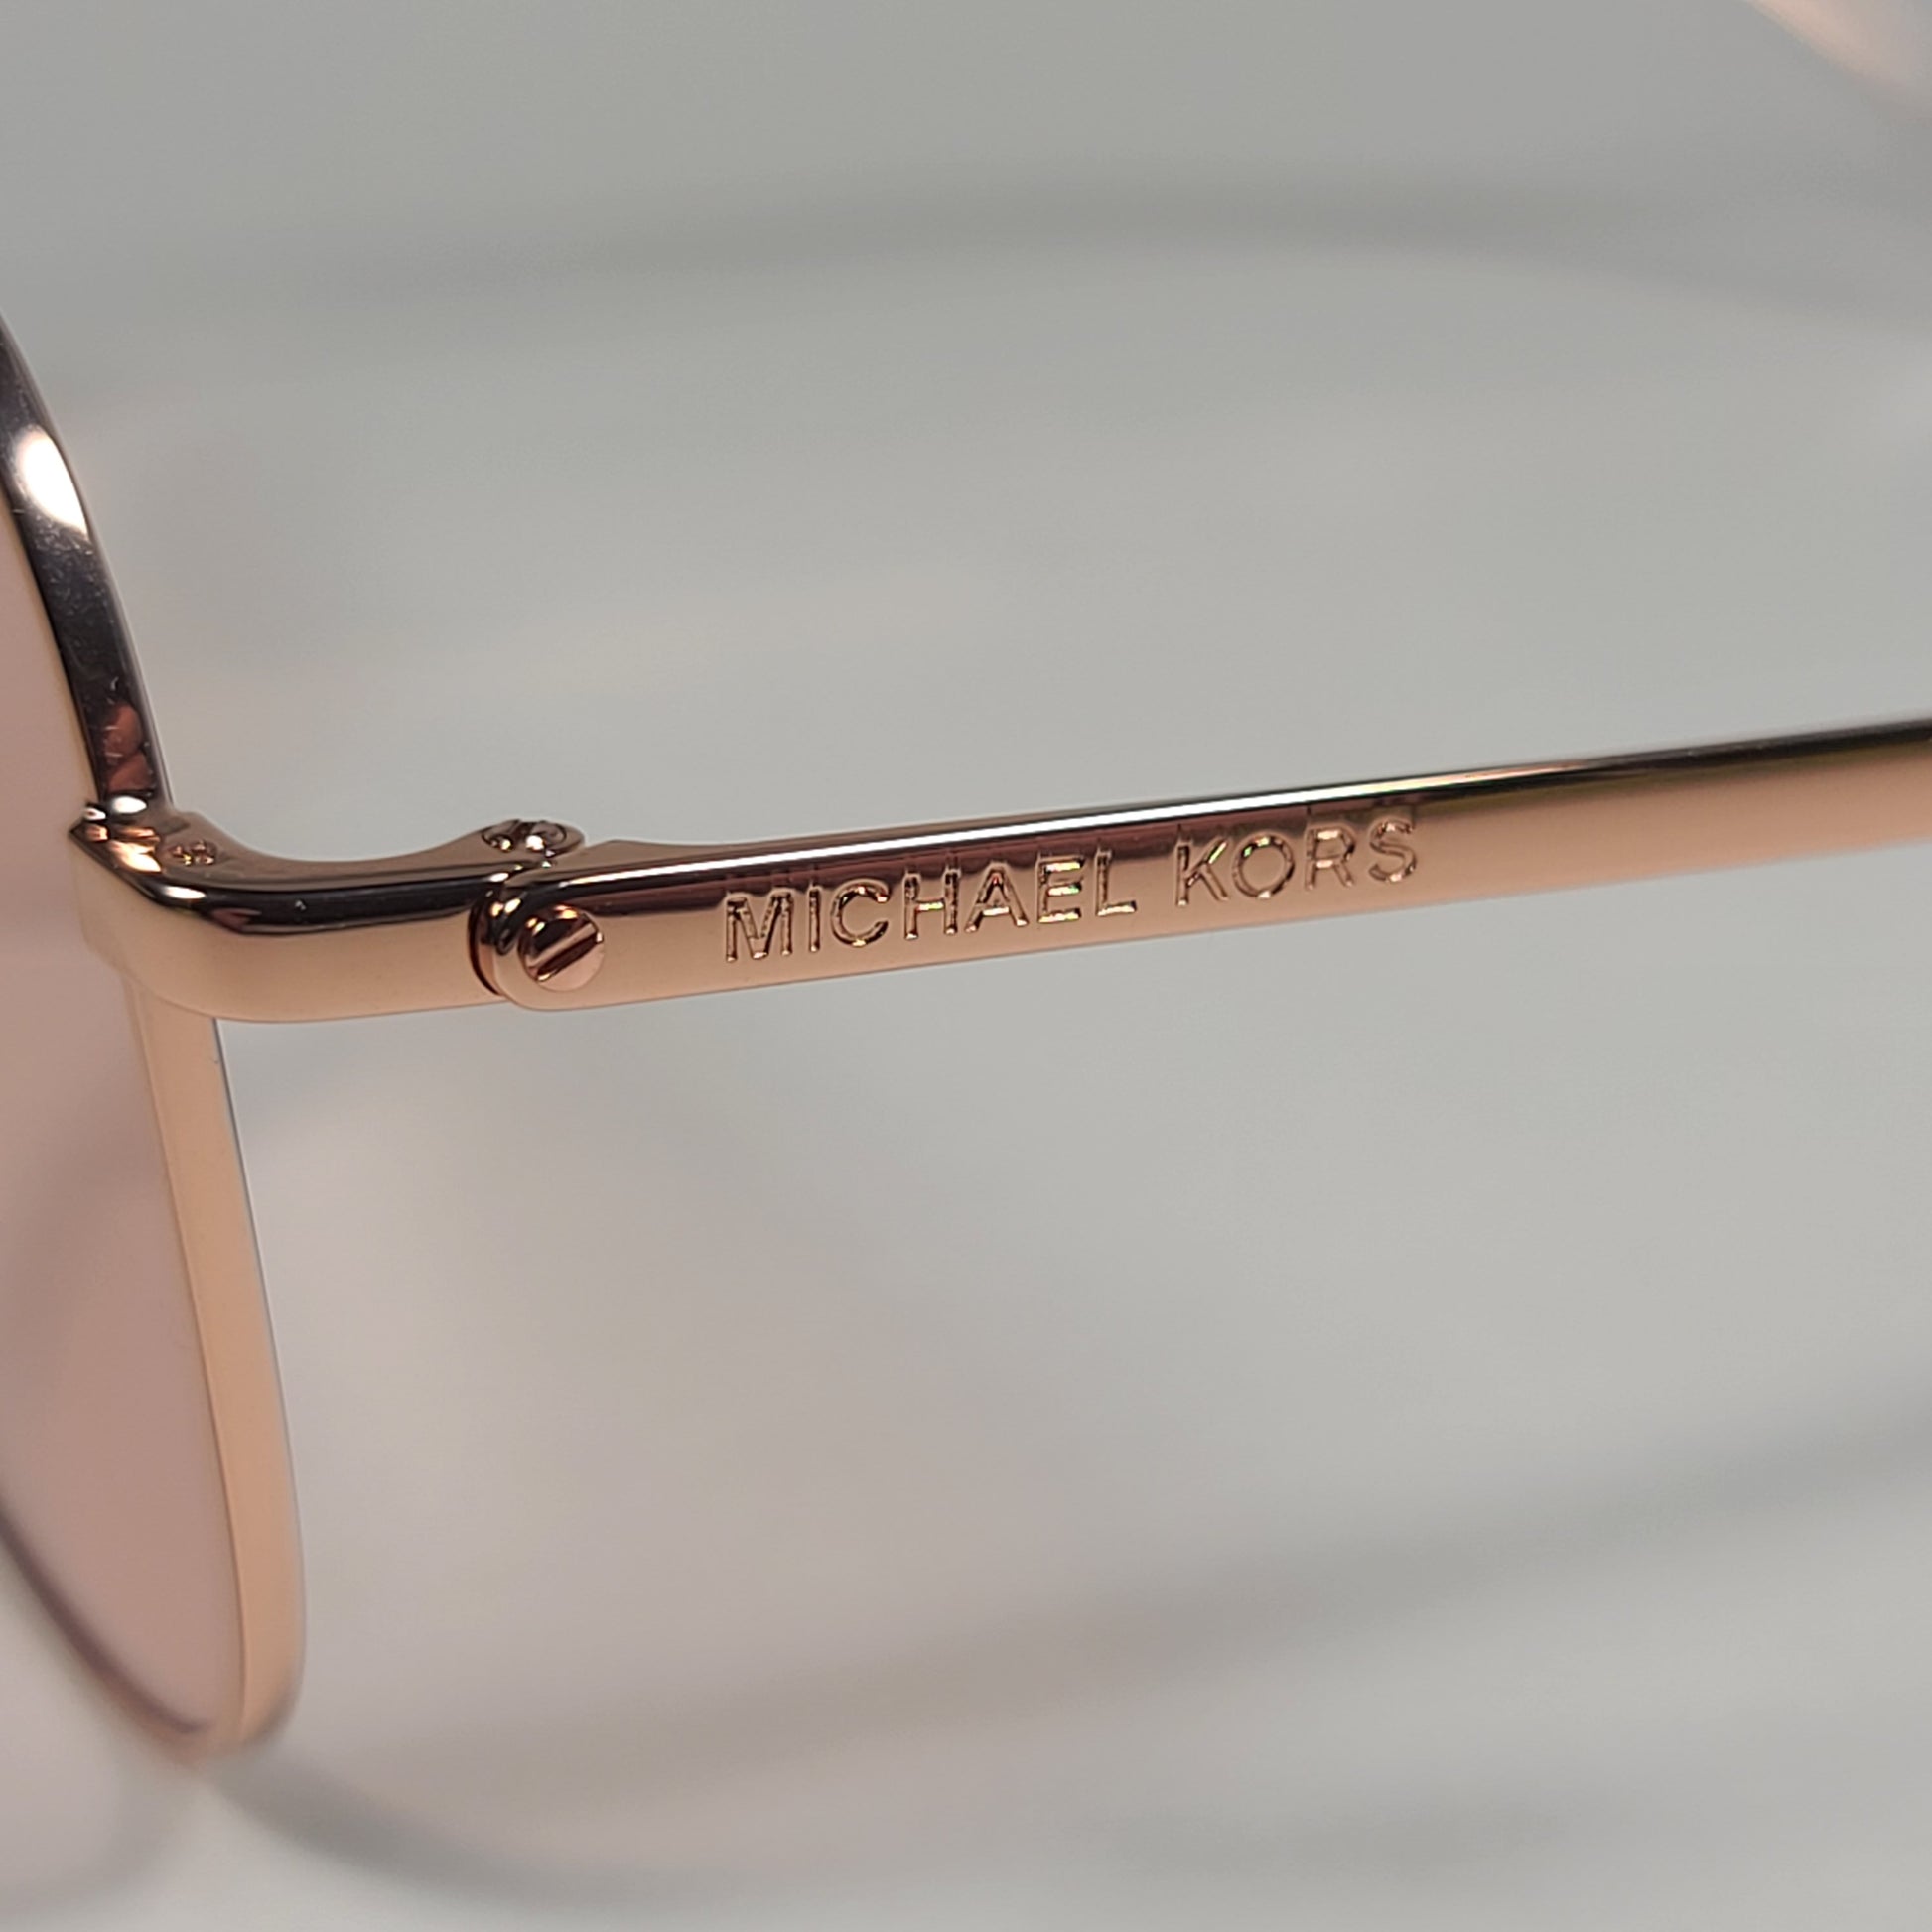 Michael Kors San Diego Aviator Sunglasses Rose Gold Frame Pink Lens MK 1045 11085 - Sunglasses